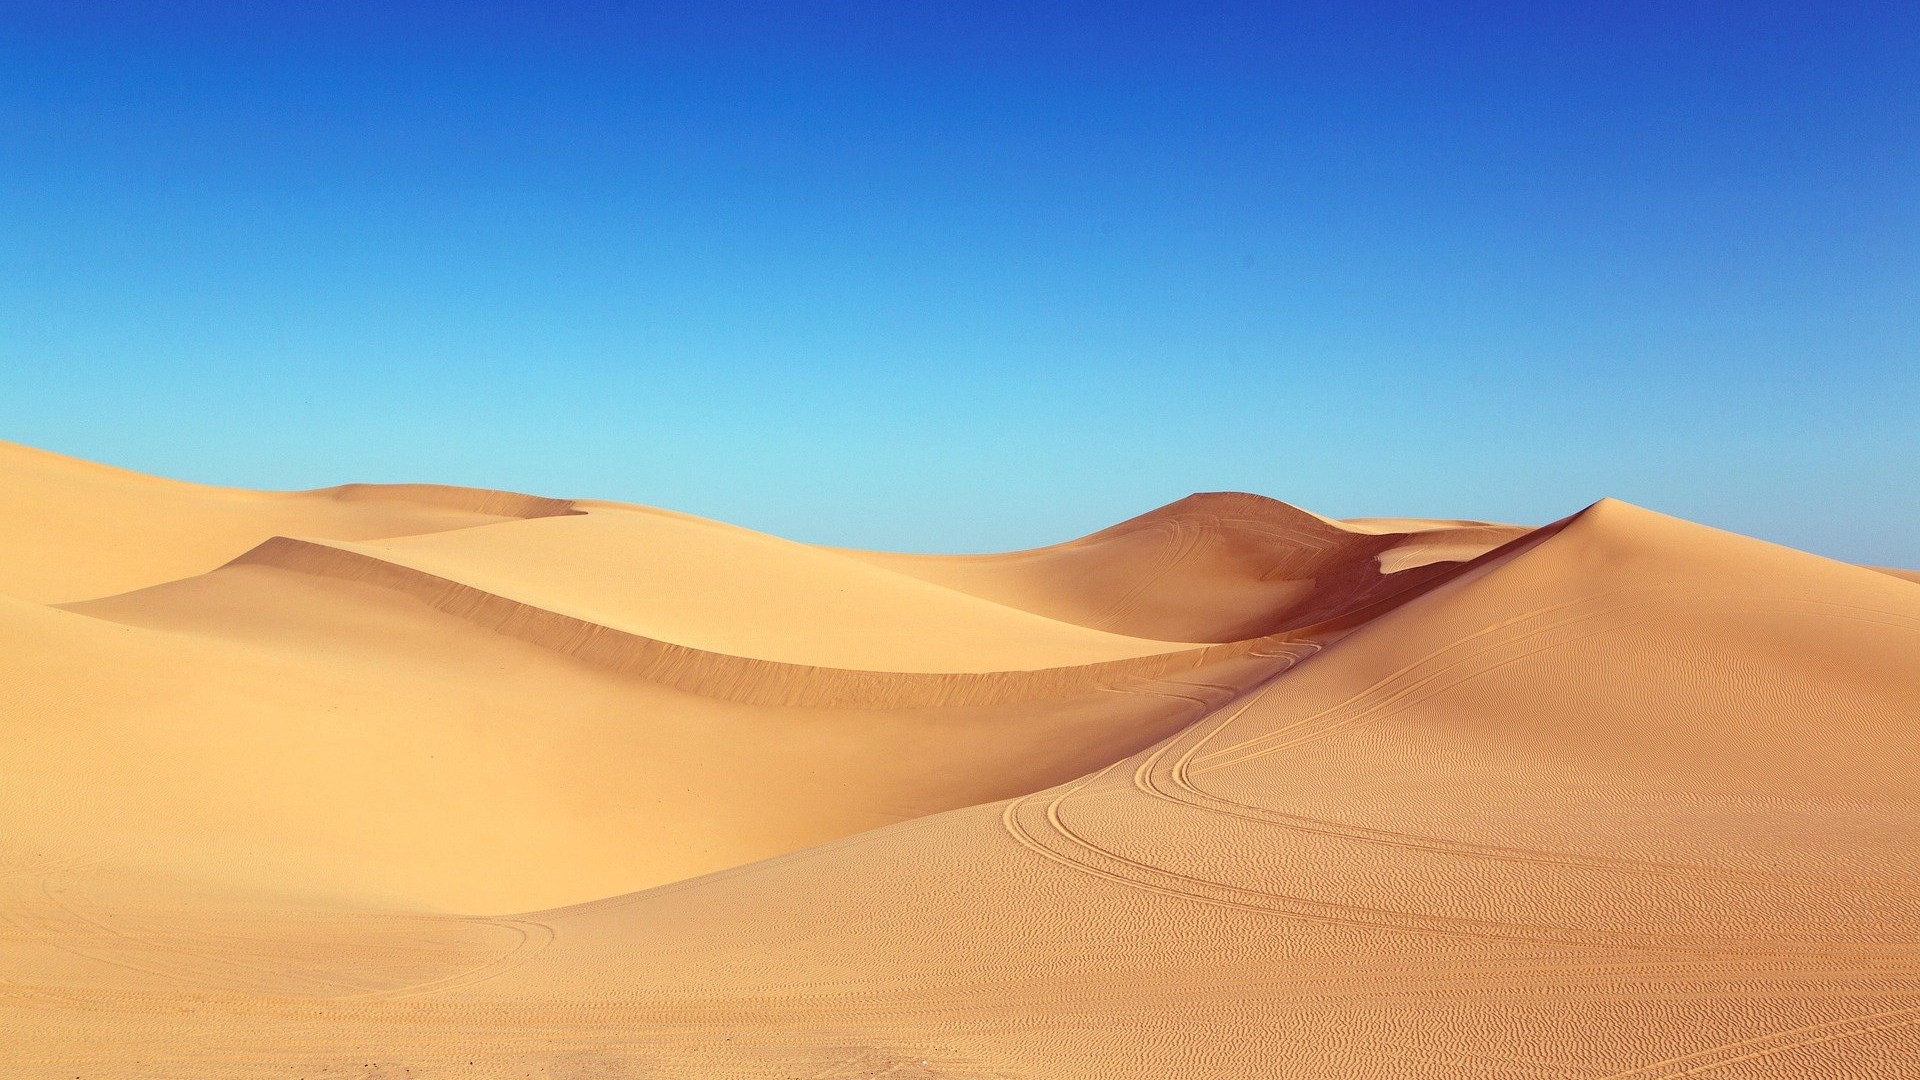 Golden sand dunes in the Sahara desert under a bright blue sky